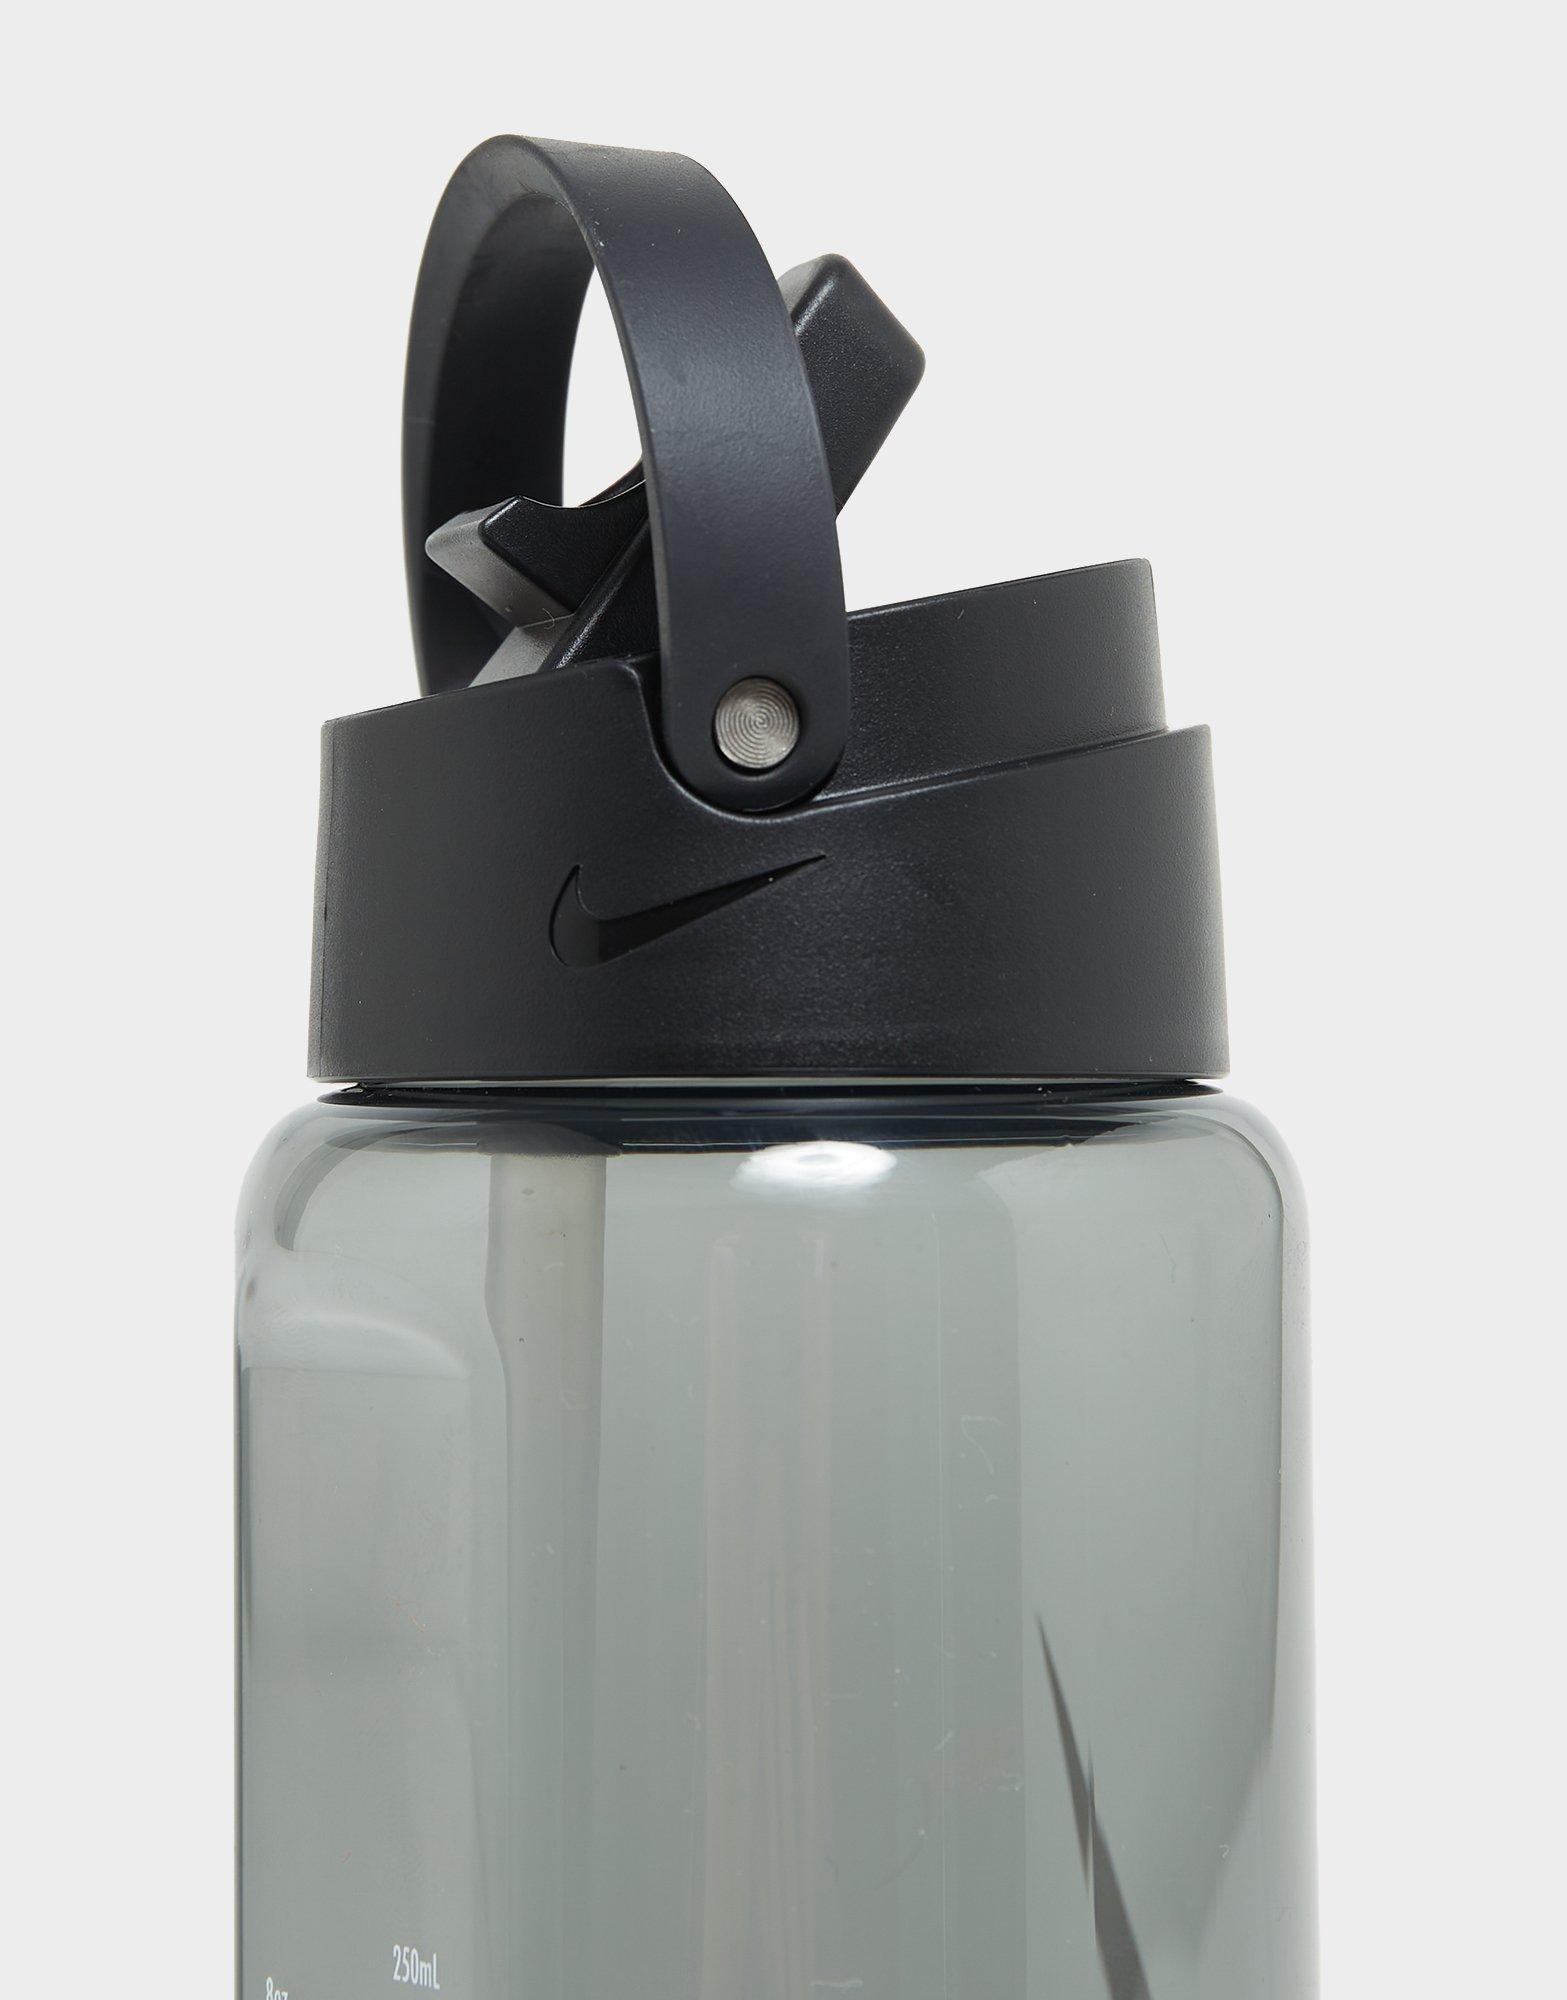 Nike Renew Recharge Straw 24 Oz. Water Bottle